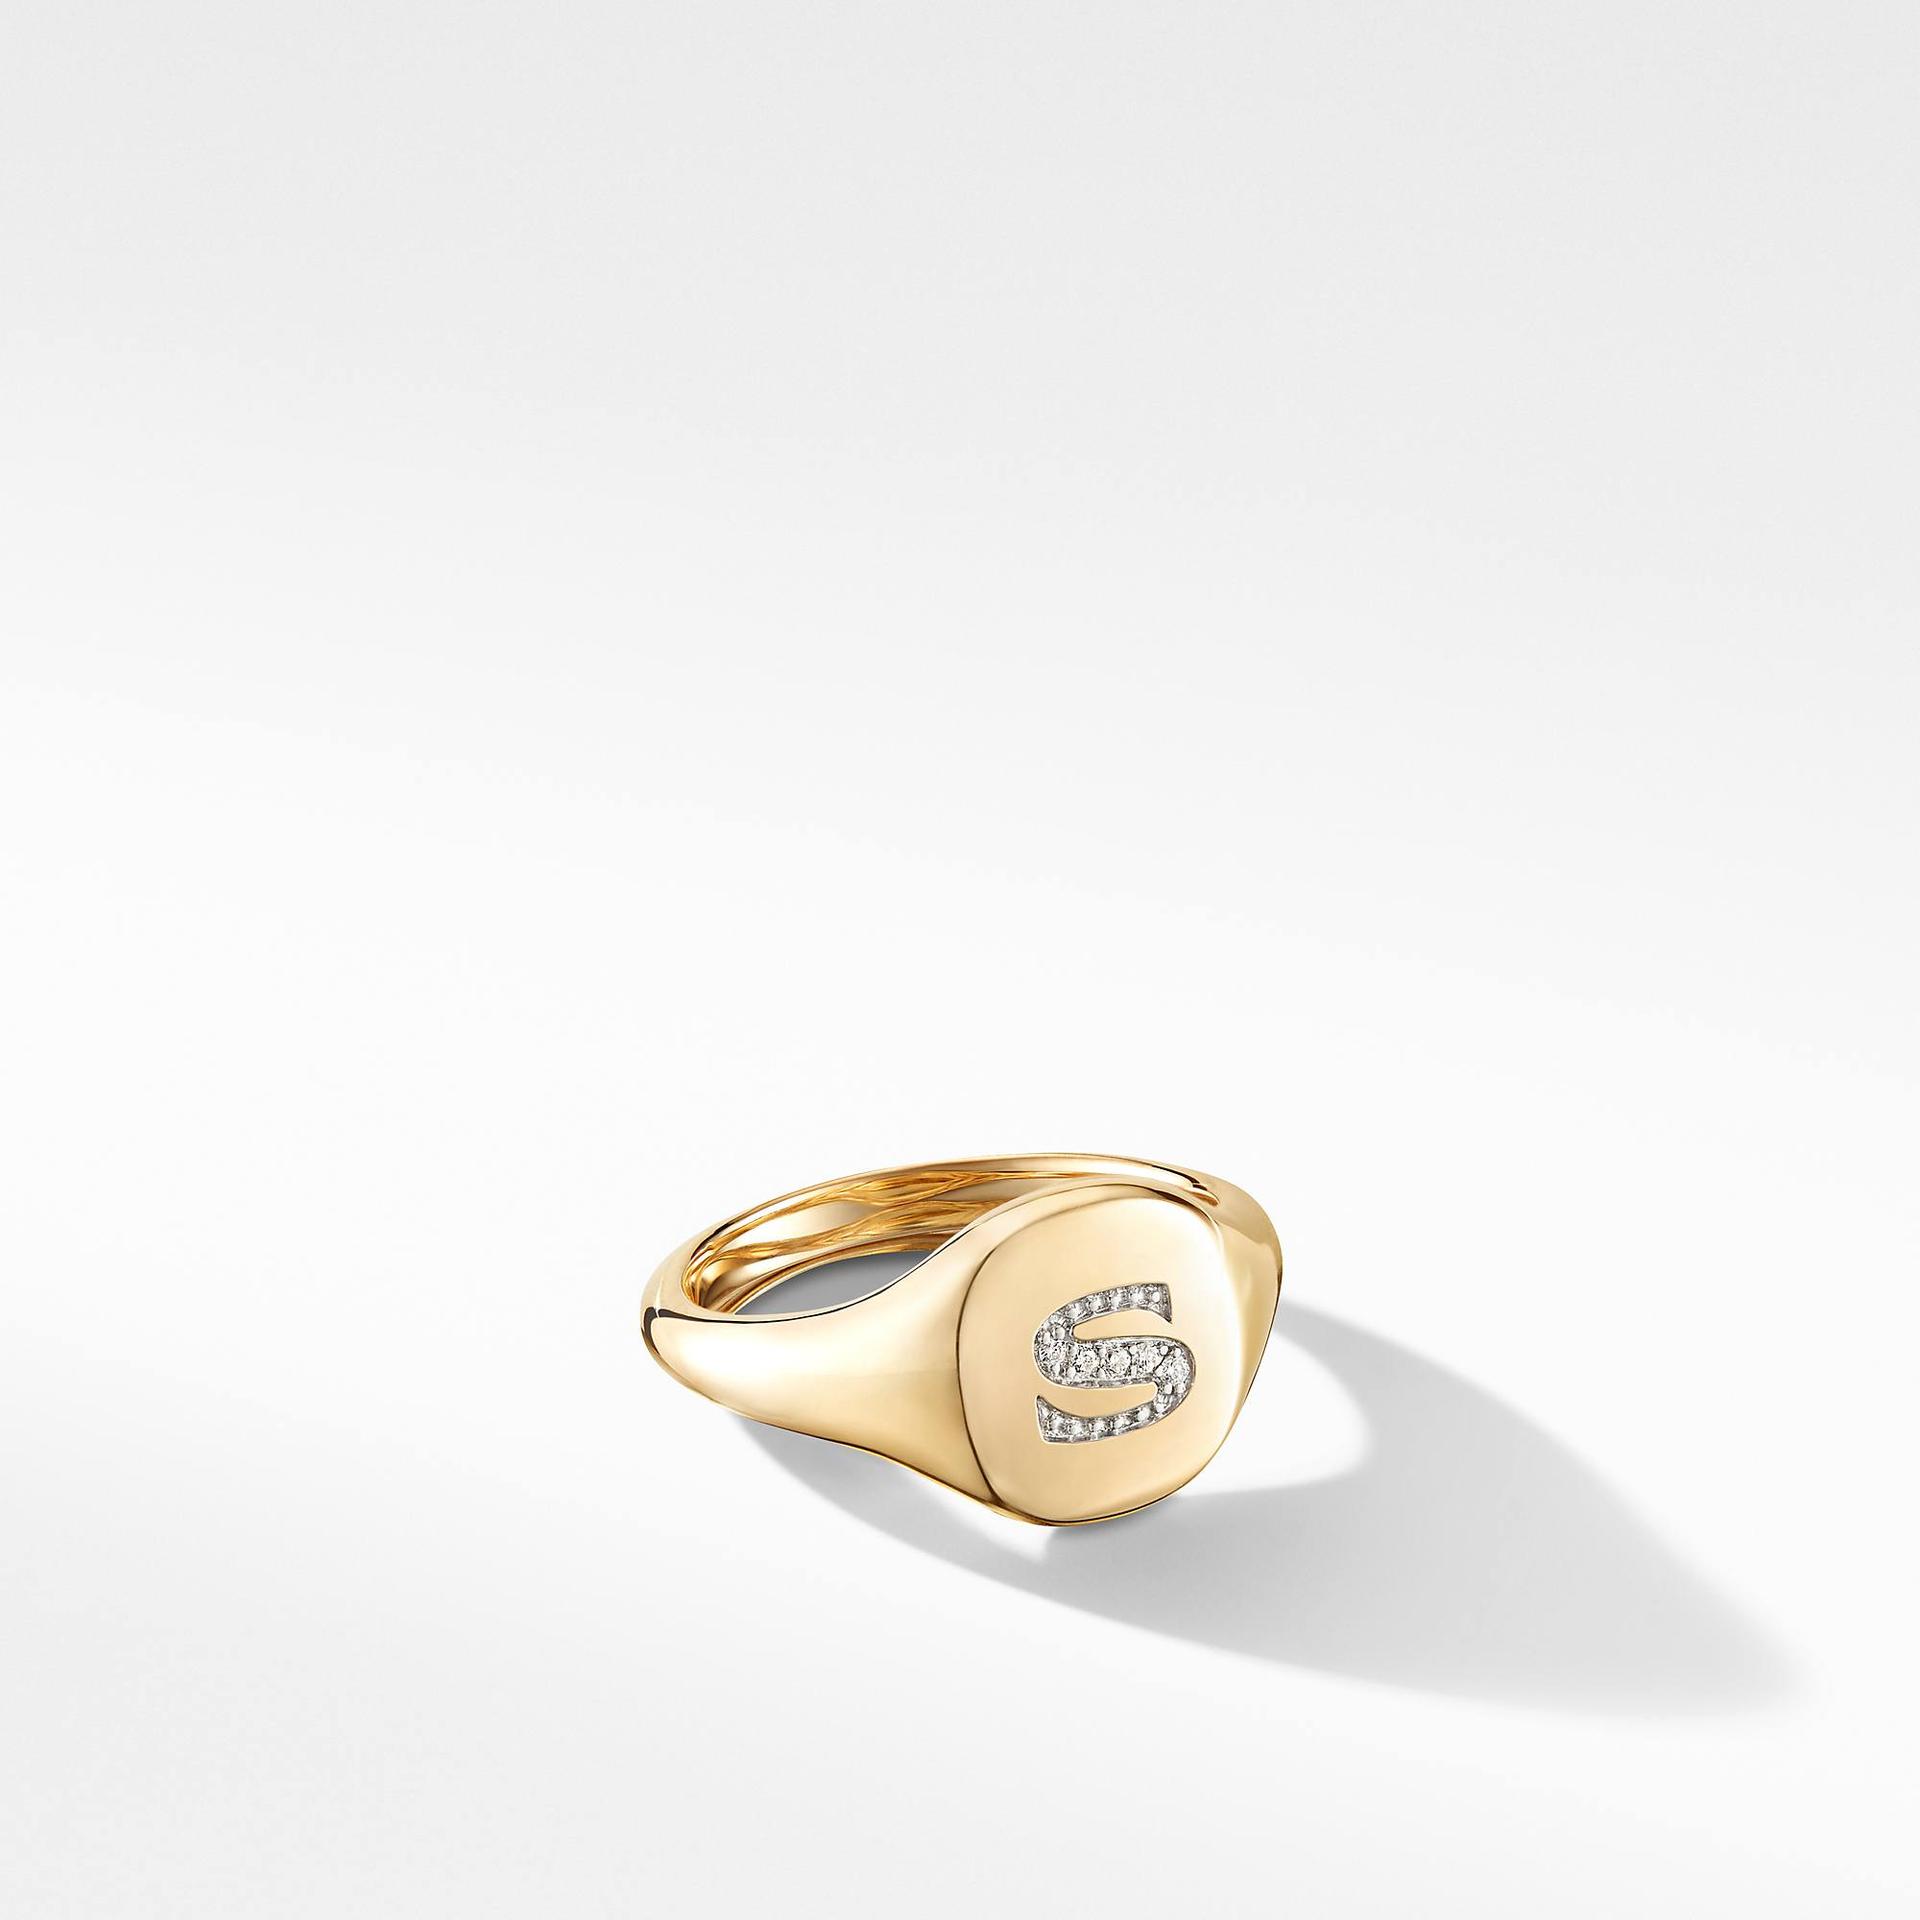 David Yurman Mini DY "S" initial Pinky Ring in 18K Yellow Gold with Diamonds, size 4 0